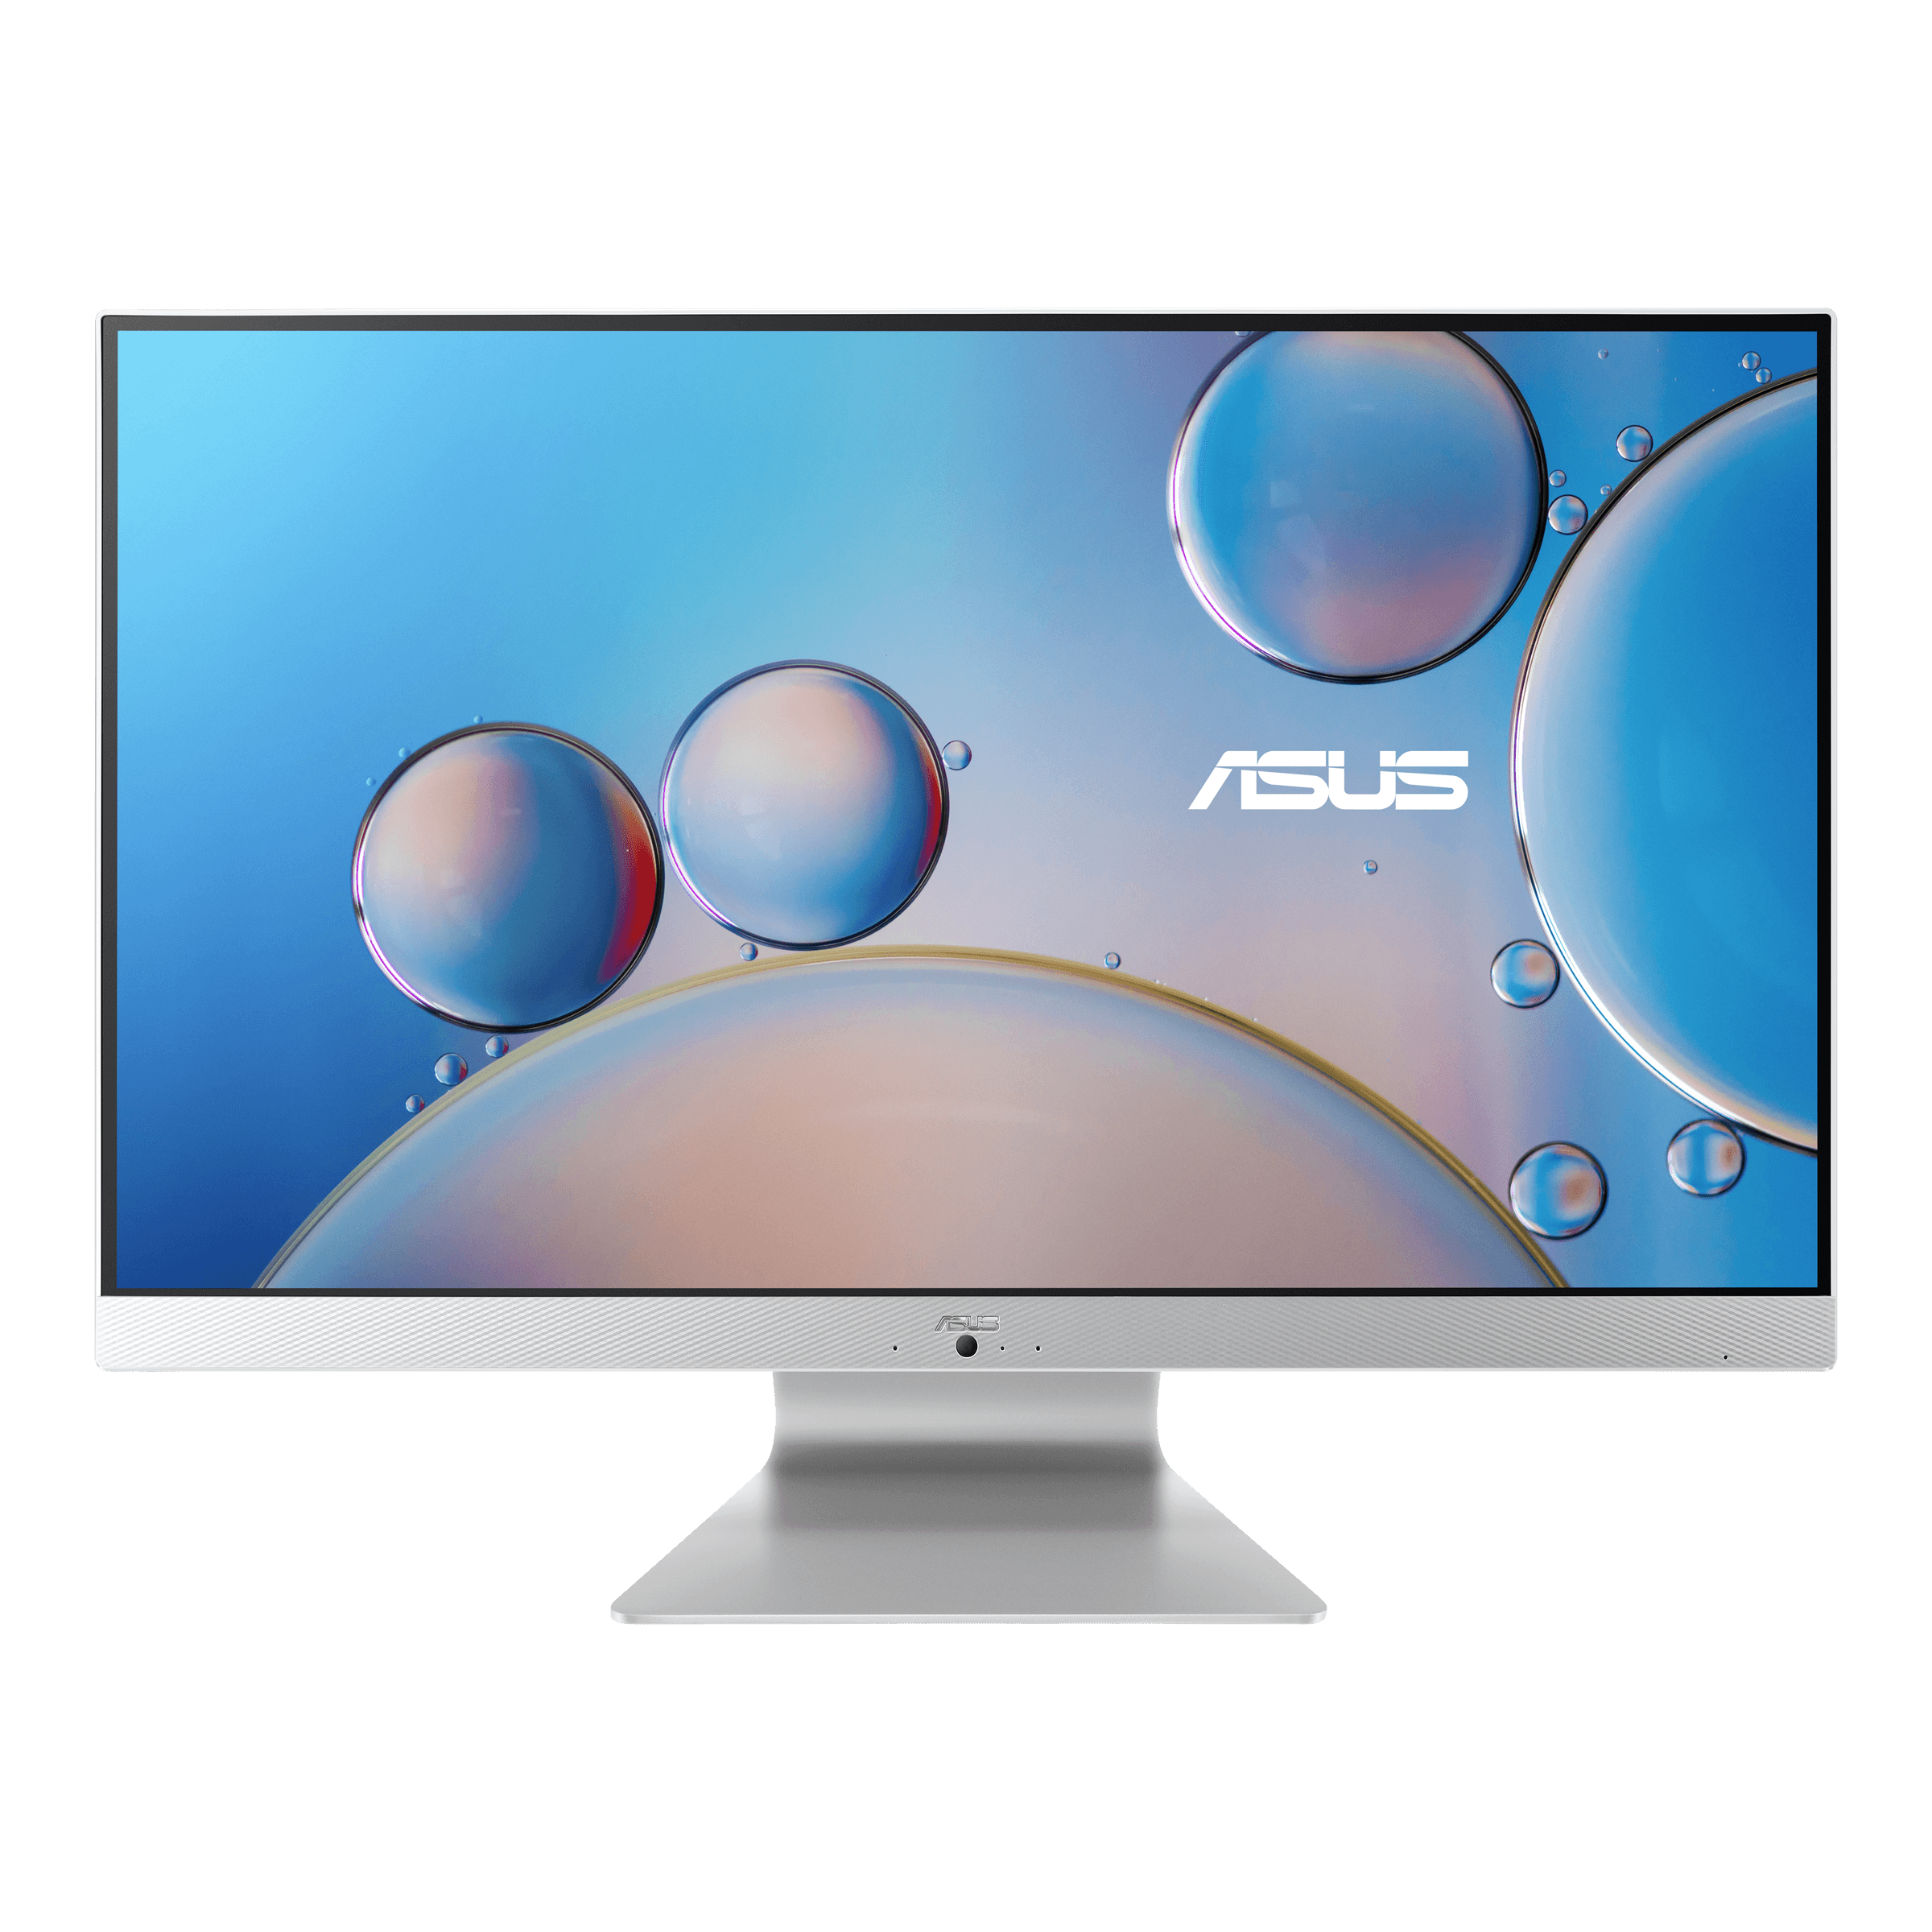 ASUS AiO 27 (M3700, AMD Ryzen 5000 Series)